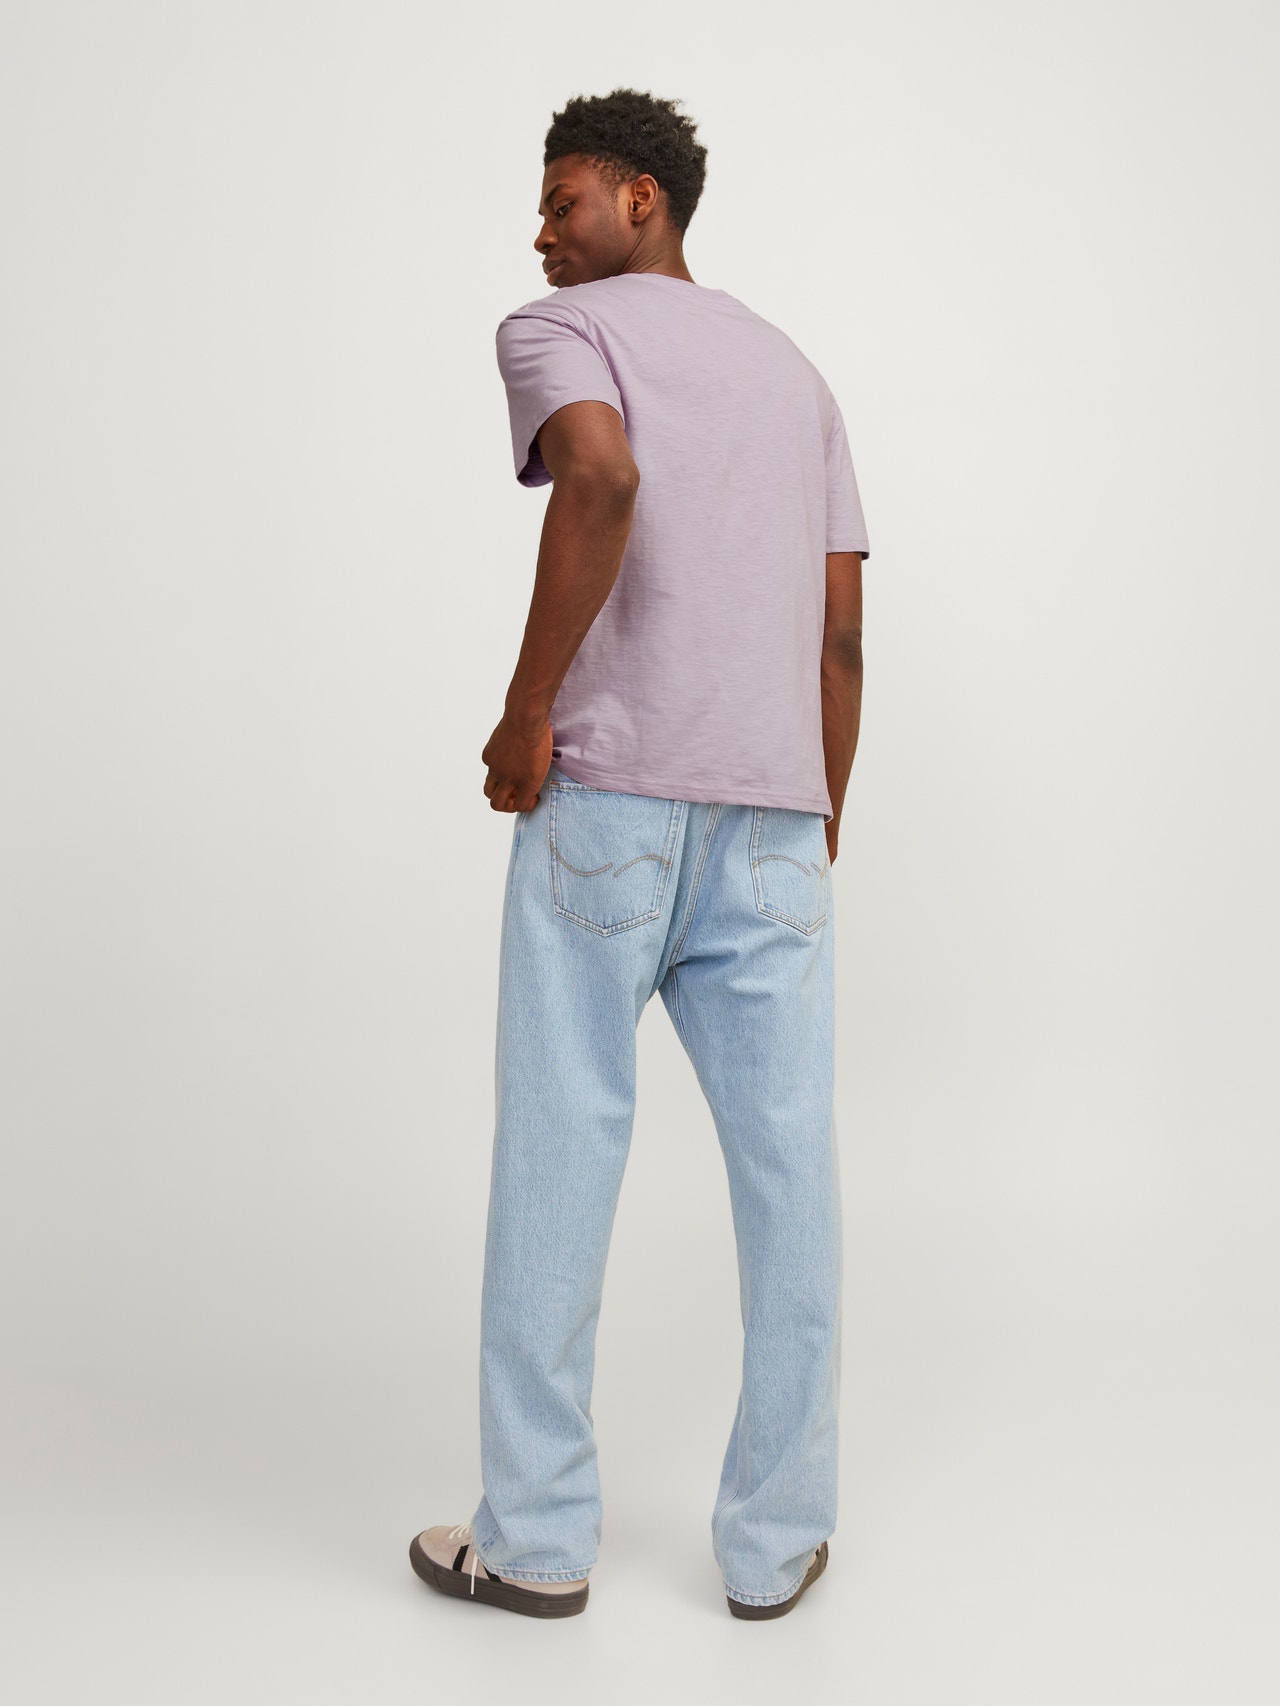 Jack & Jones T-shirt Estampar Decote Redondo -Lavender Frost - 12256215